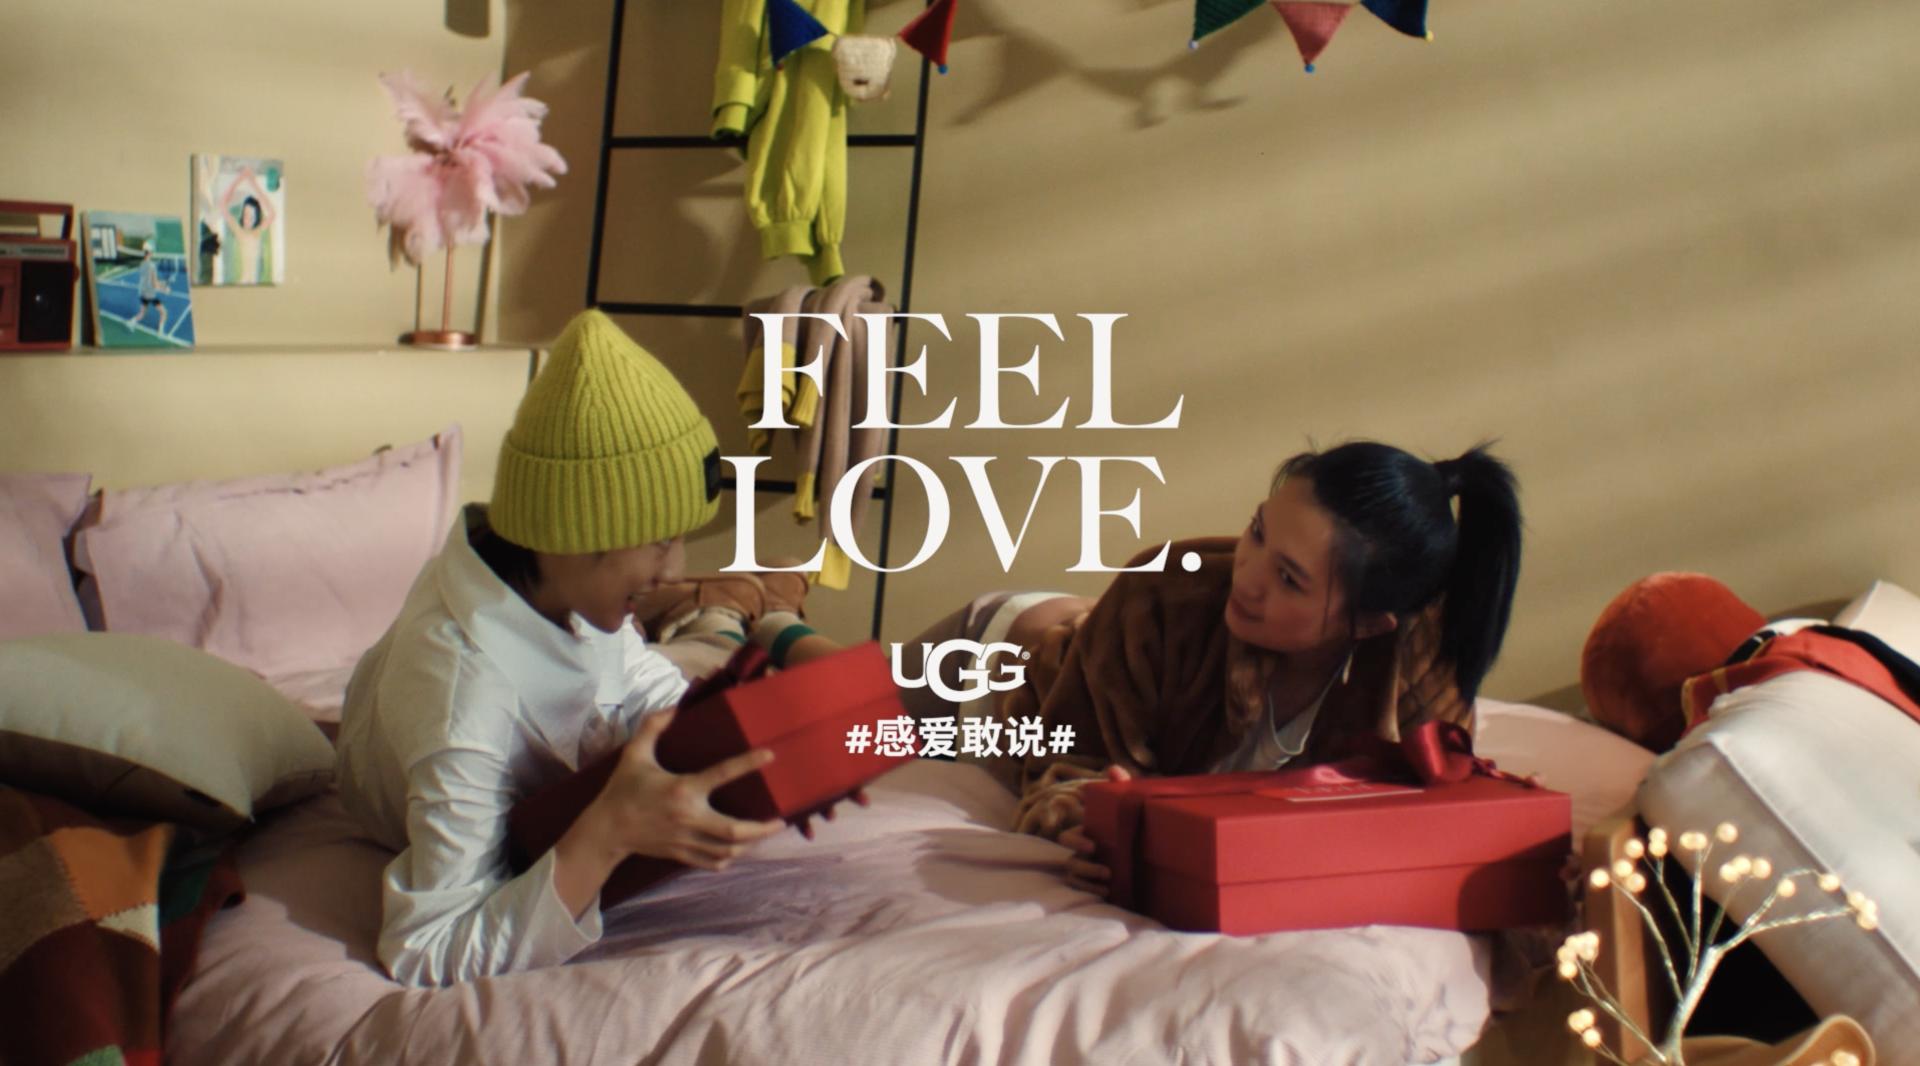 Feel Love. by UGG (feat. 吴月+邱明)